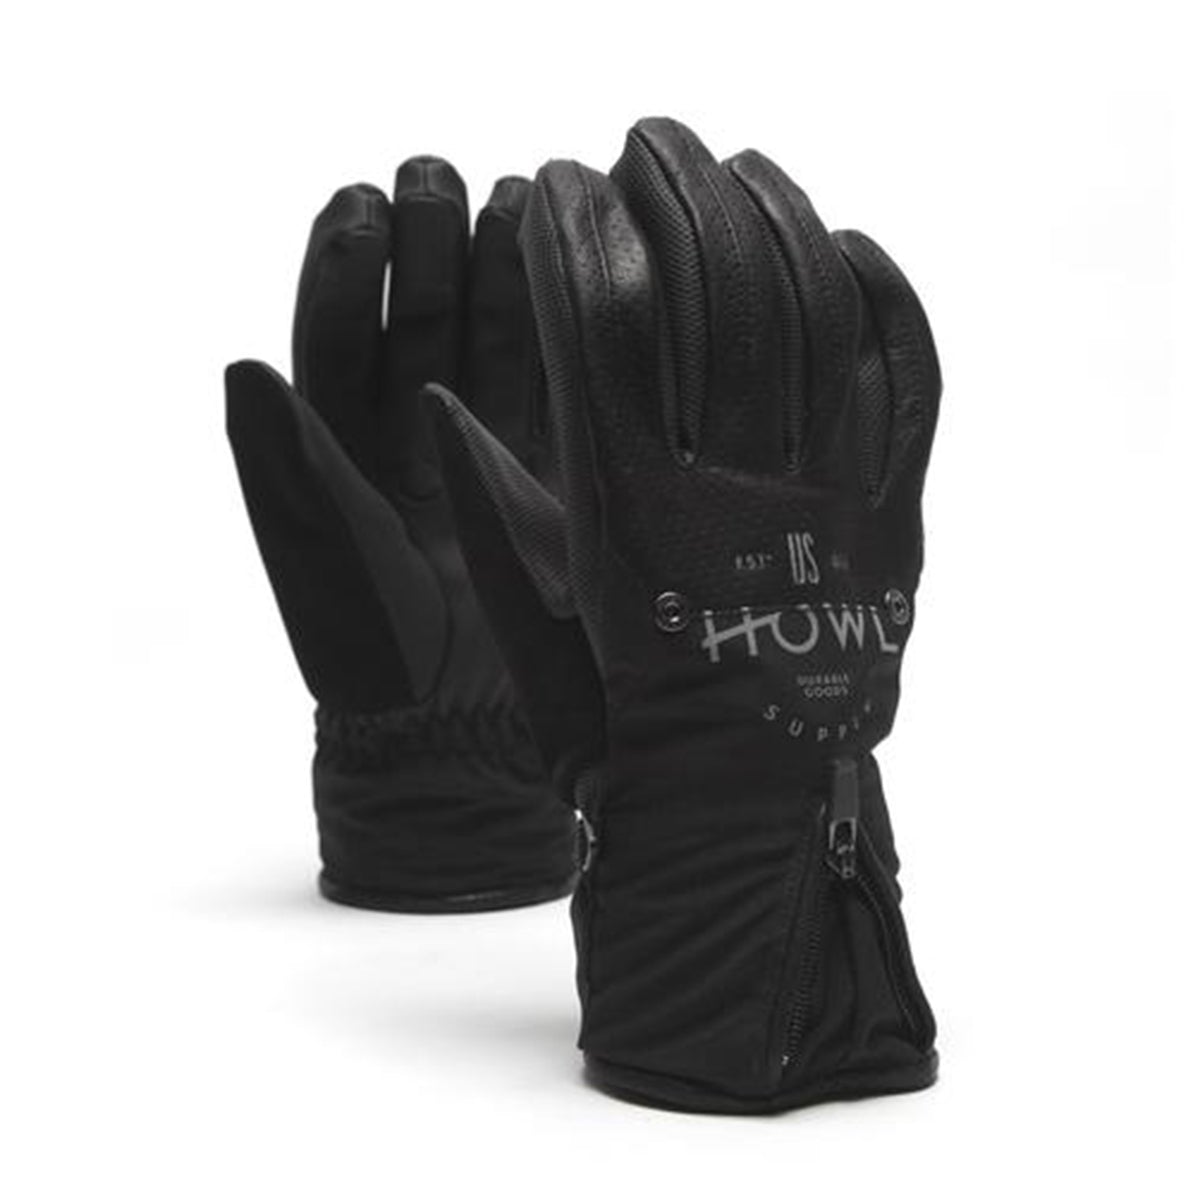 Howl Union Snowboard Gloves - Black image 1